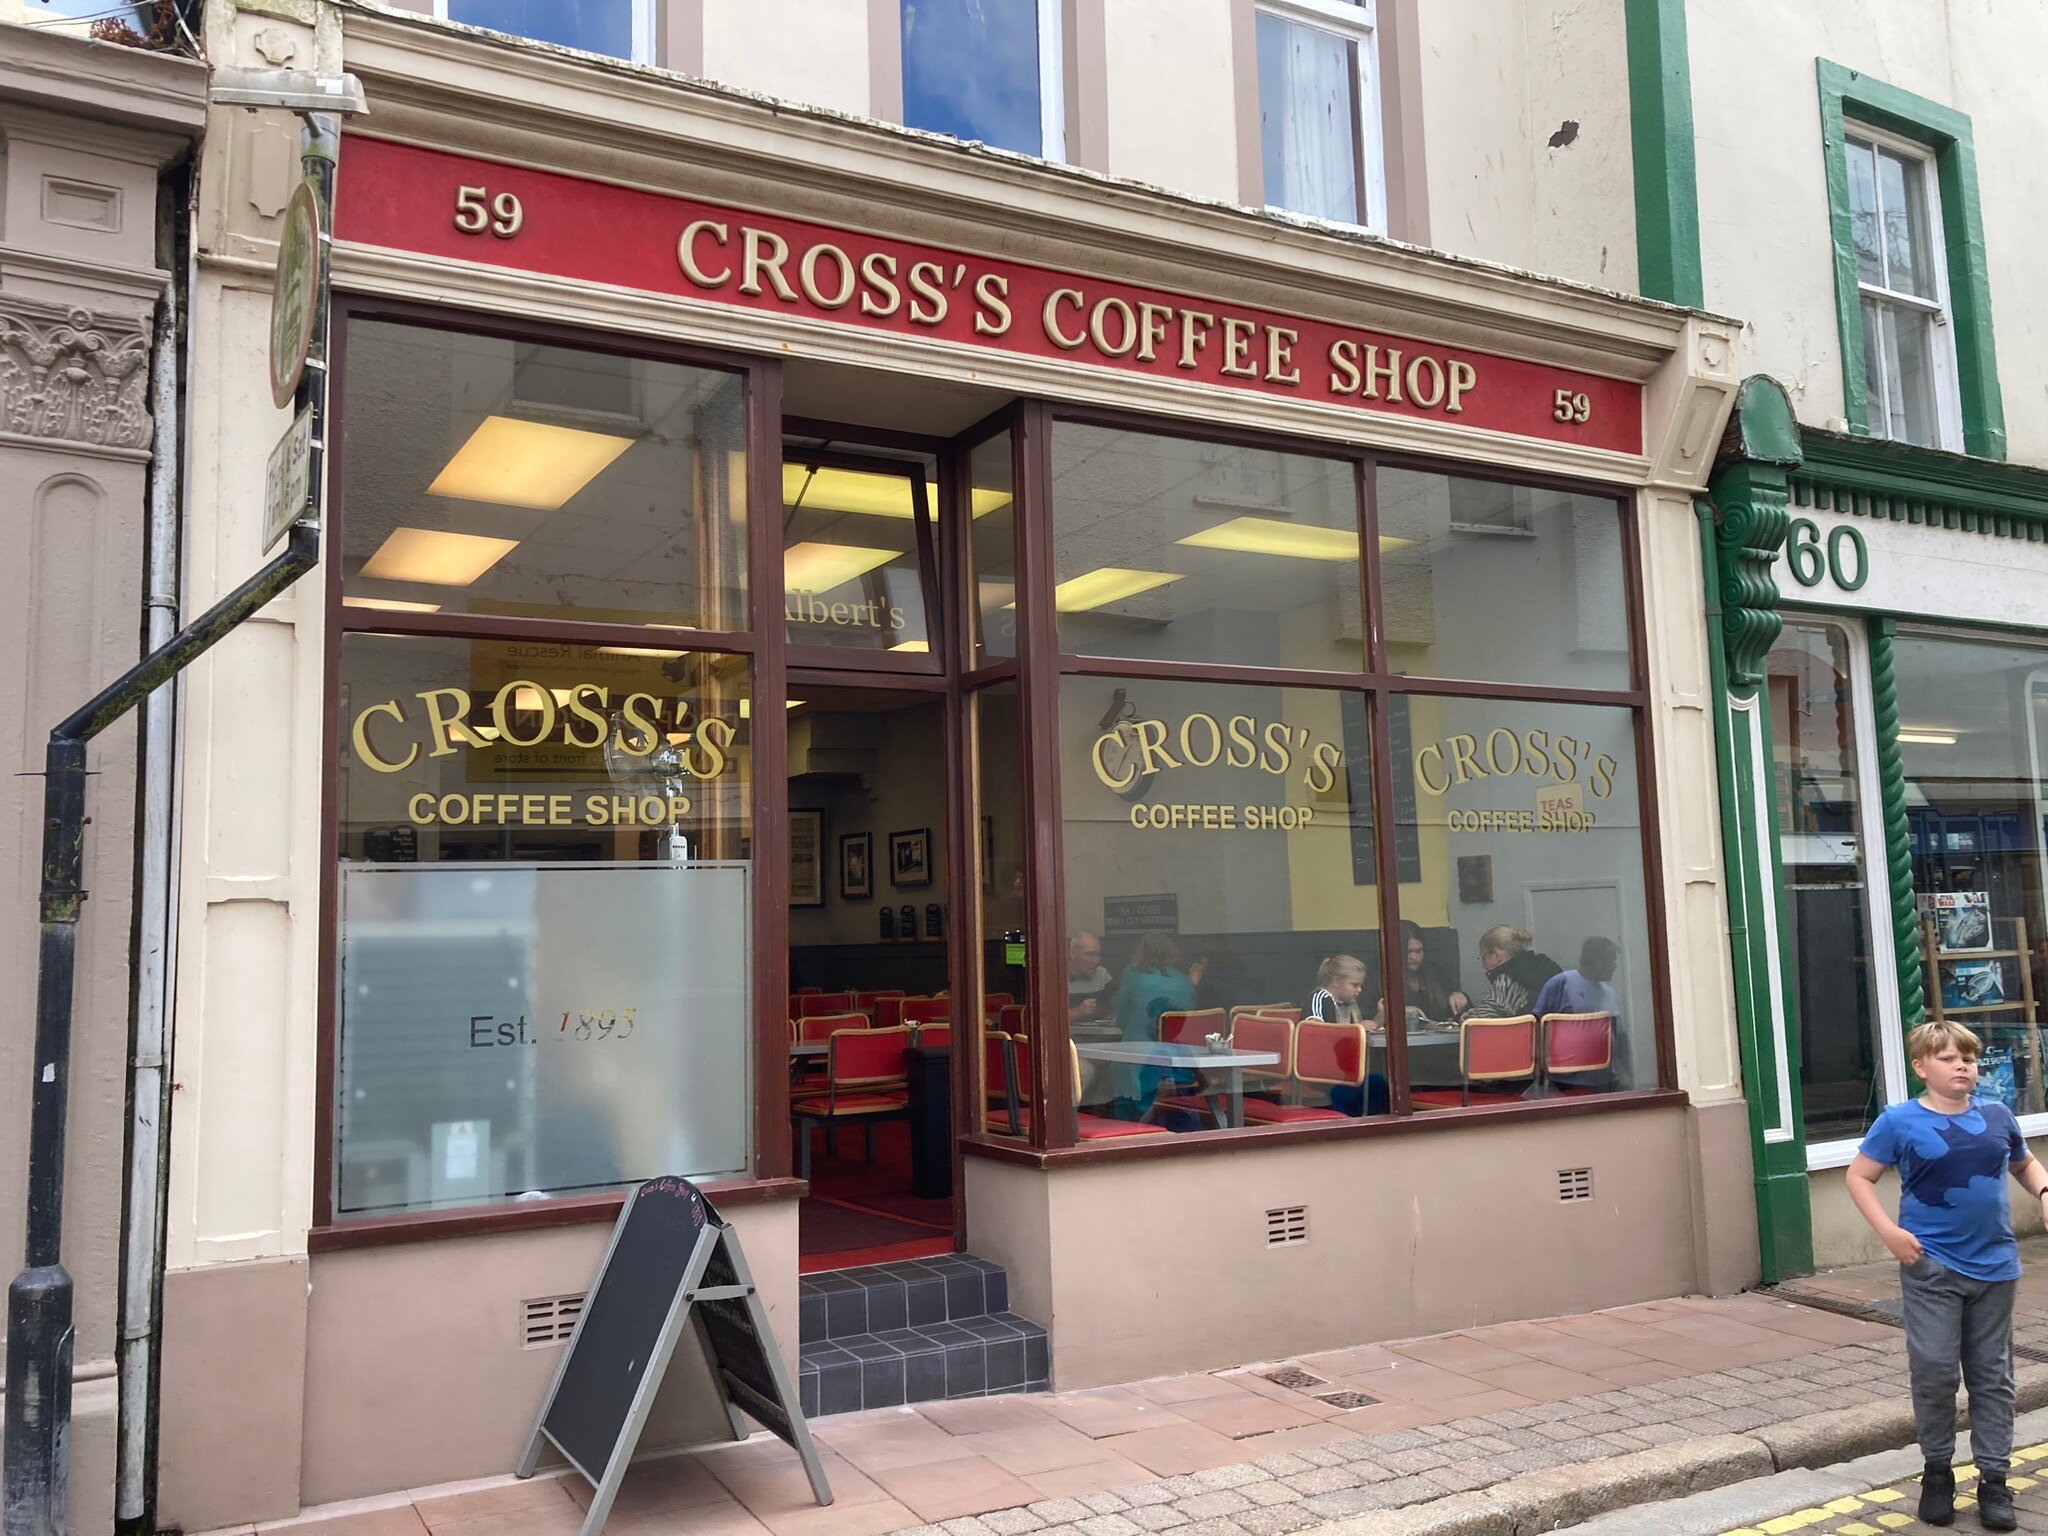 Cross's Coffee Shop